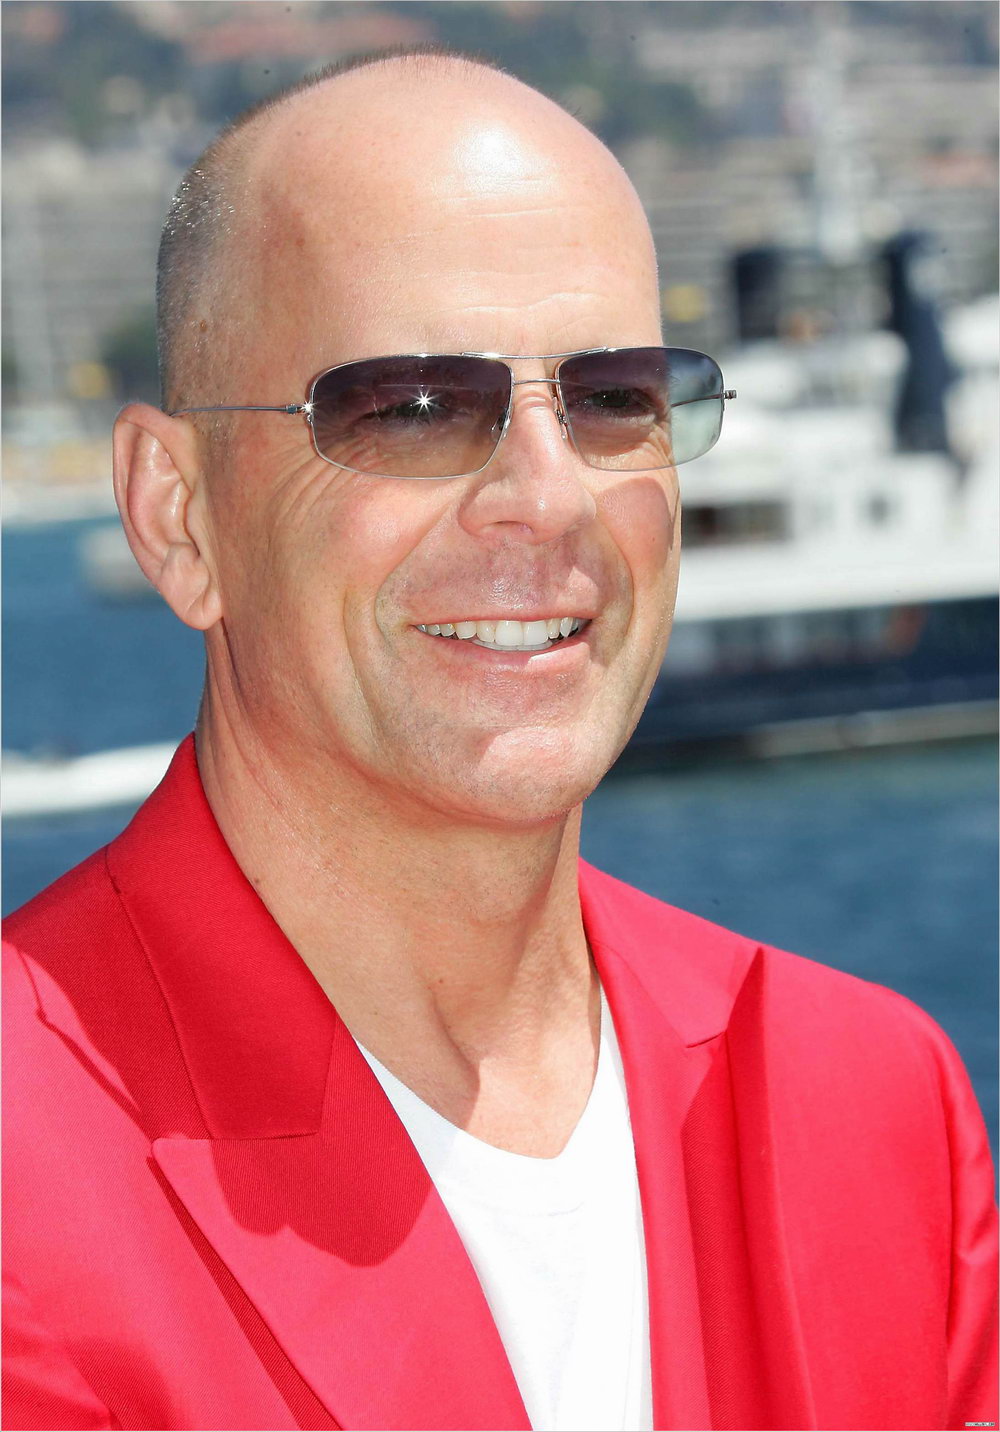 Bruce Willis photo 59 of 221 pics, wallpaper - photo #91289 - ThePlace2